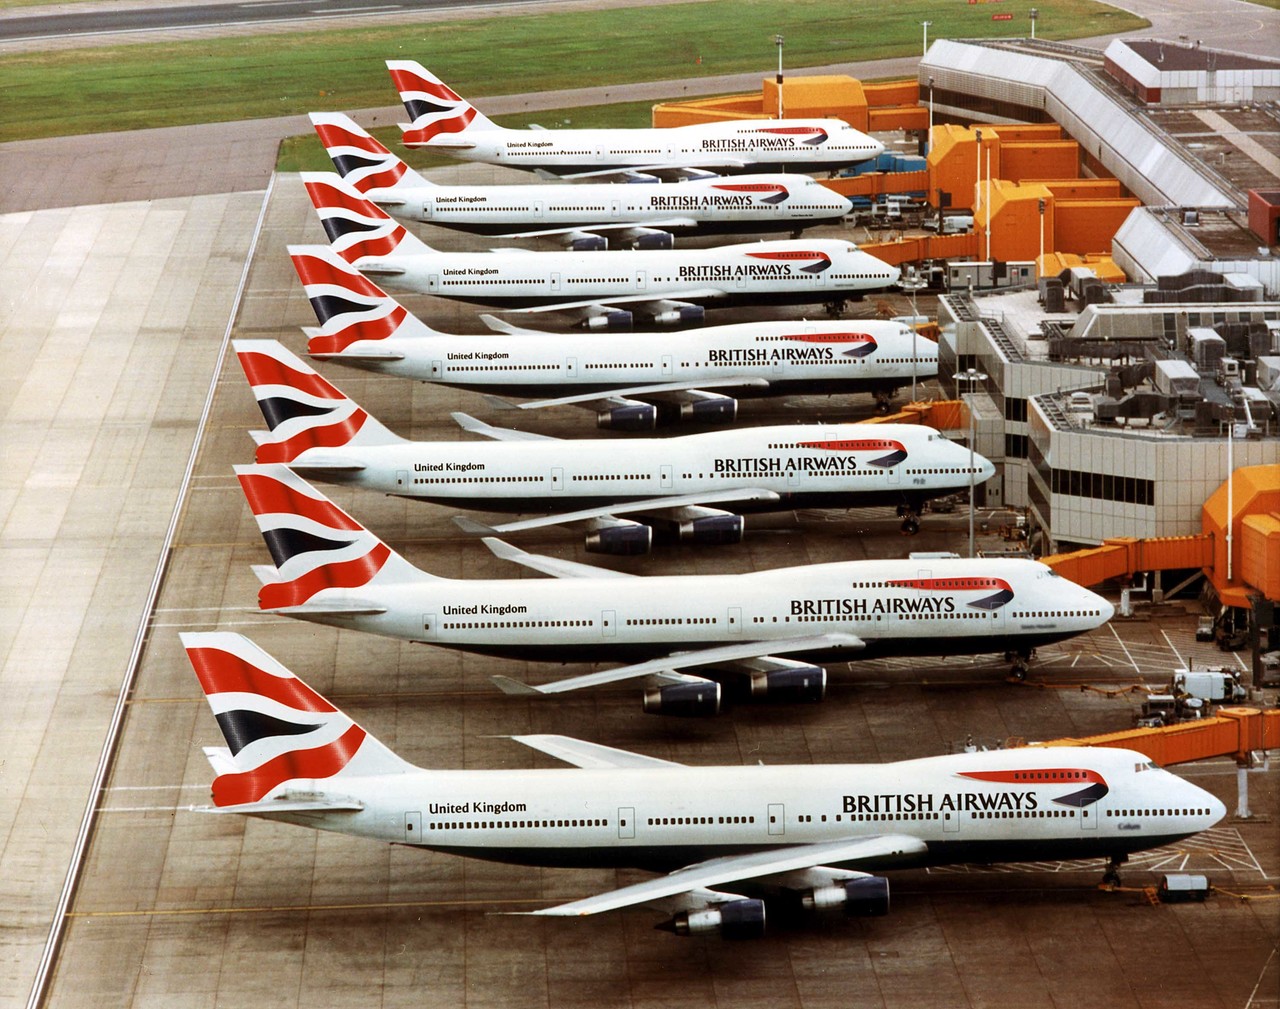 BA Boeing 747 fleet